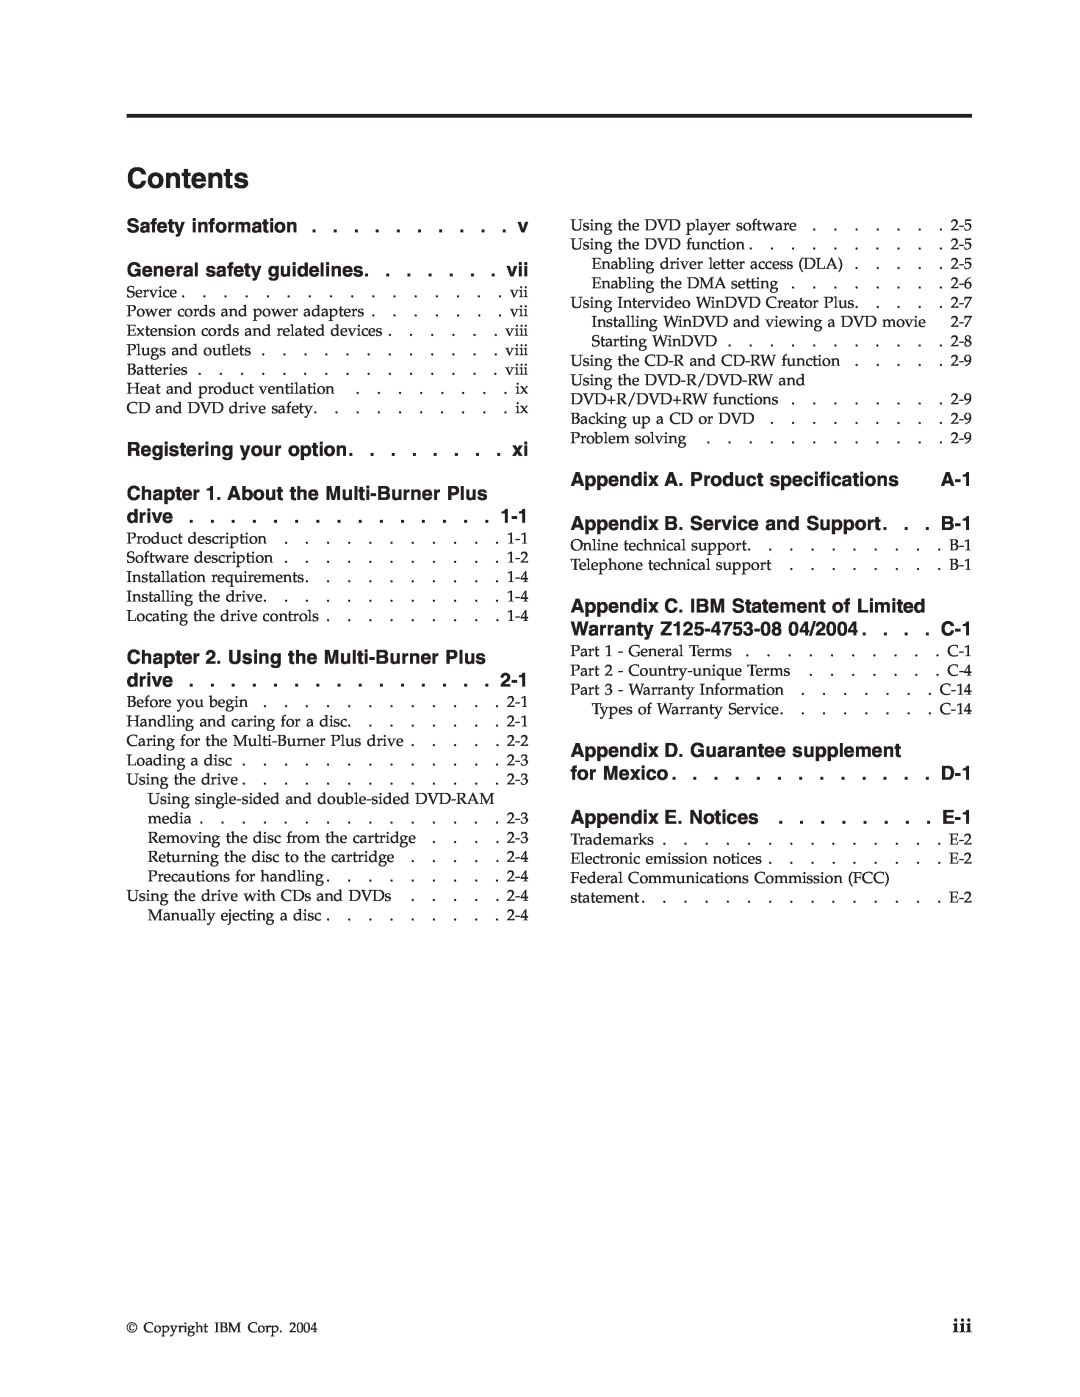 IBM 73P3315 manual Contents, Copyright IBM Corp 